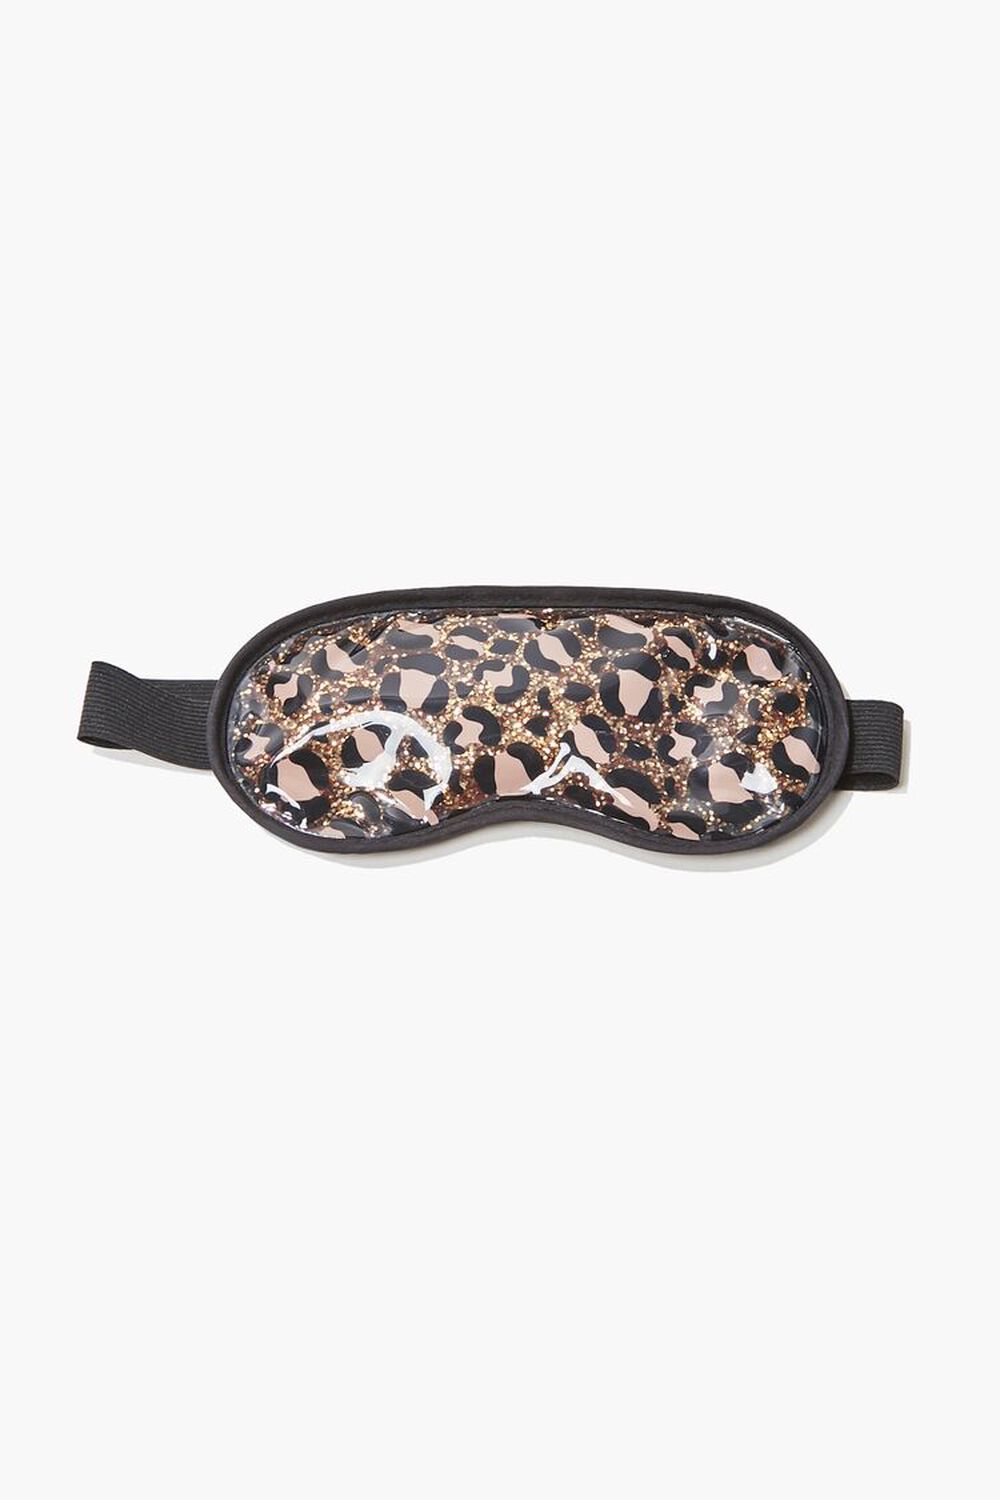 BROWN/MULTI Leopard Print Jelly Eye Mask, image 1